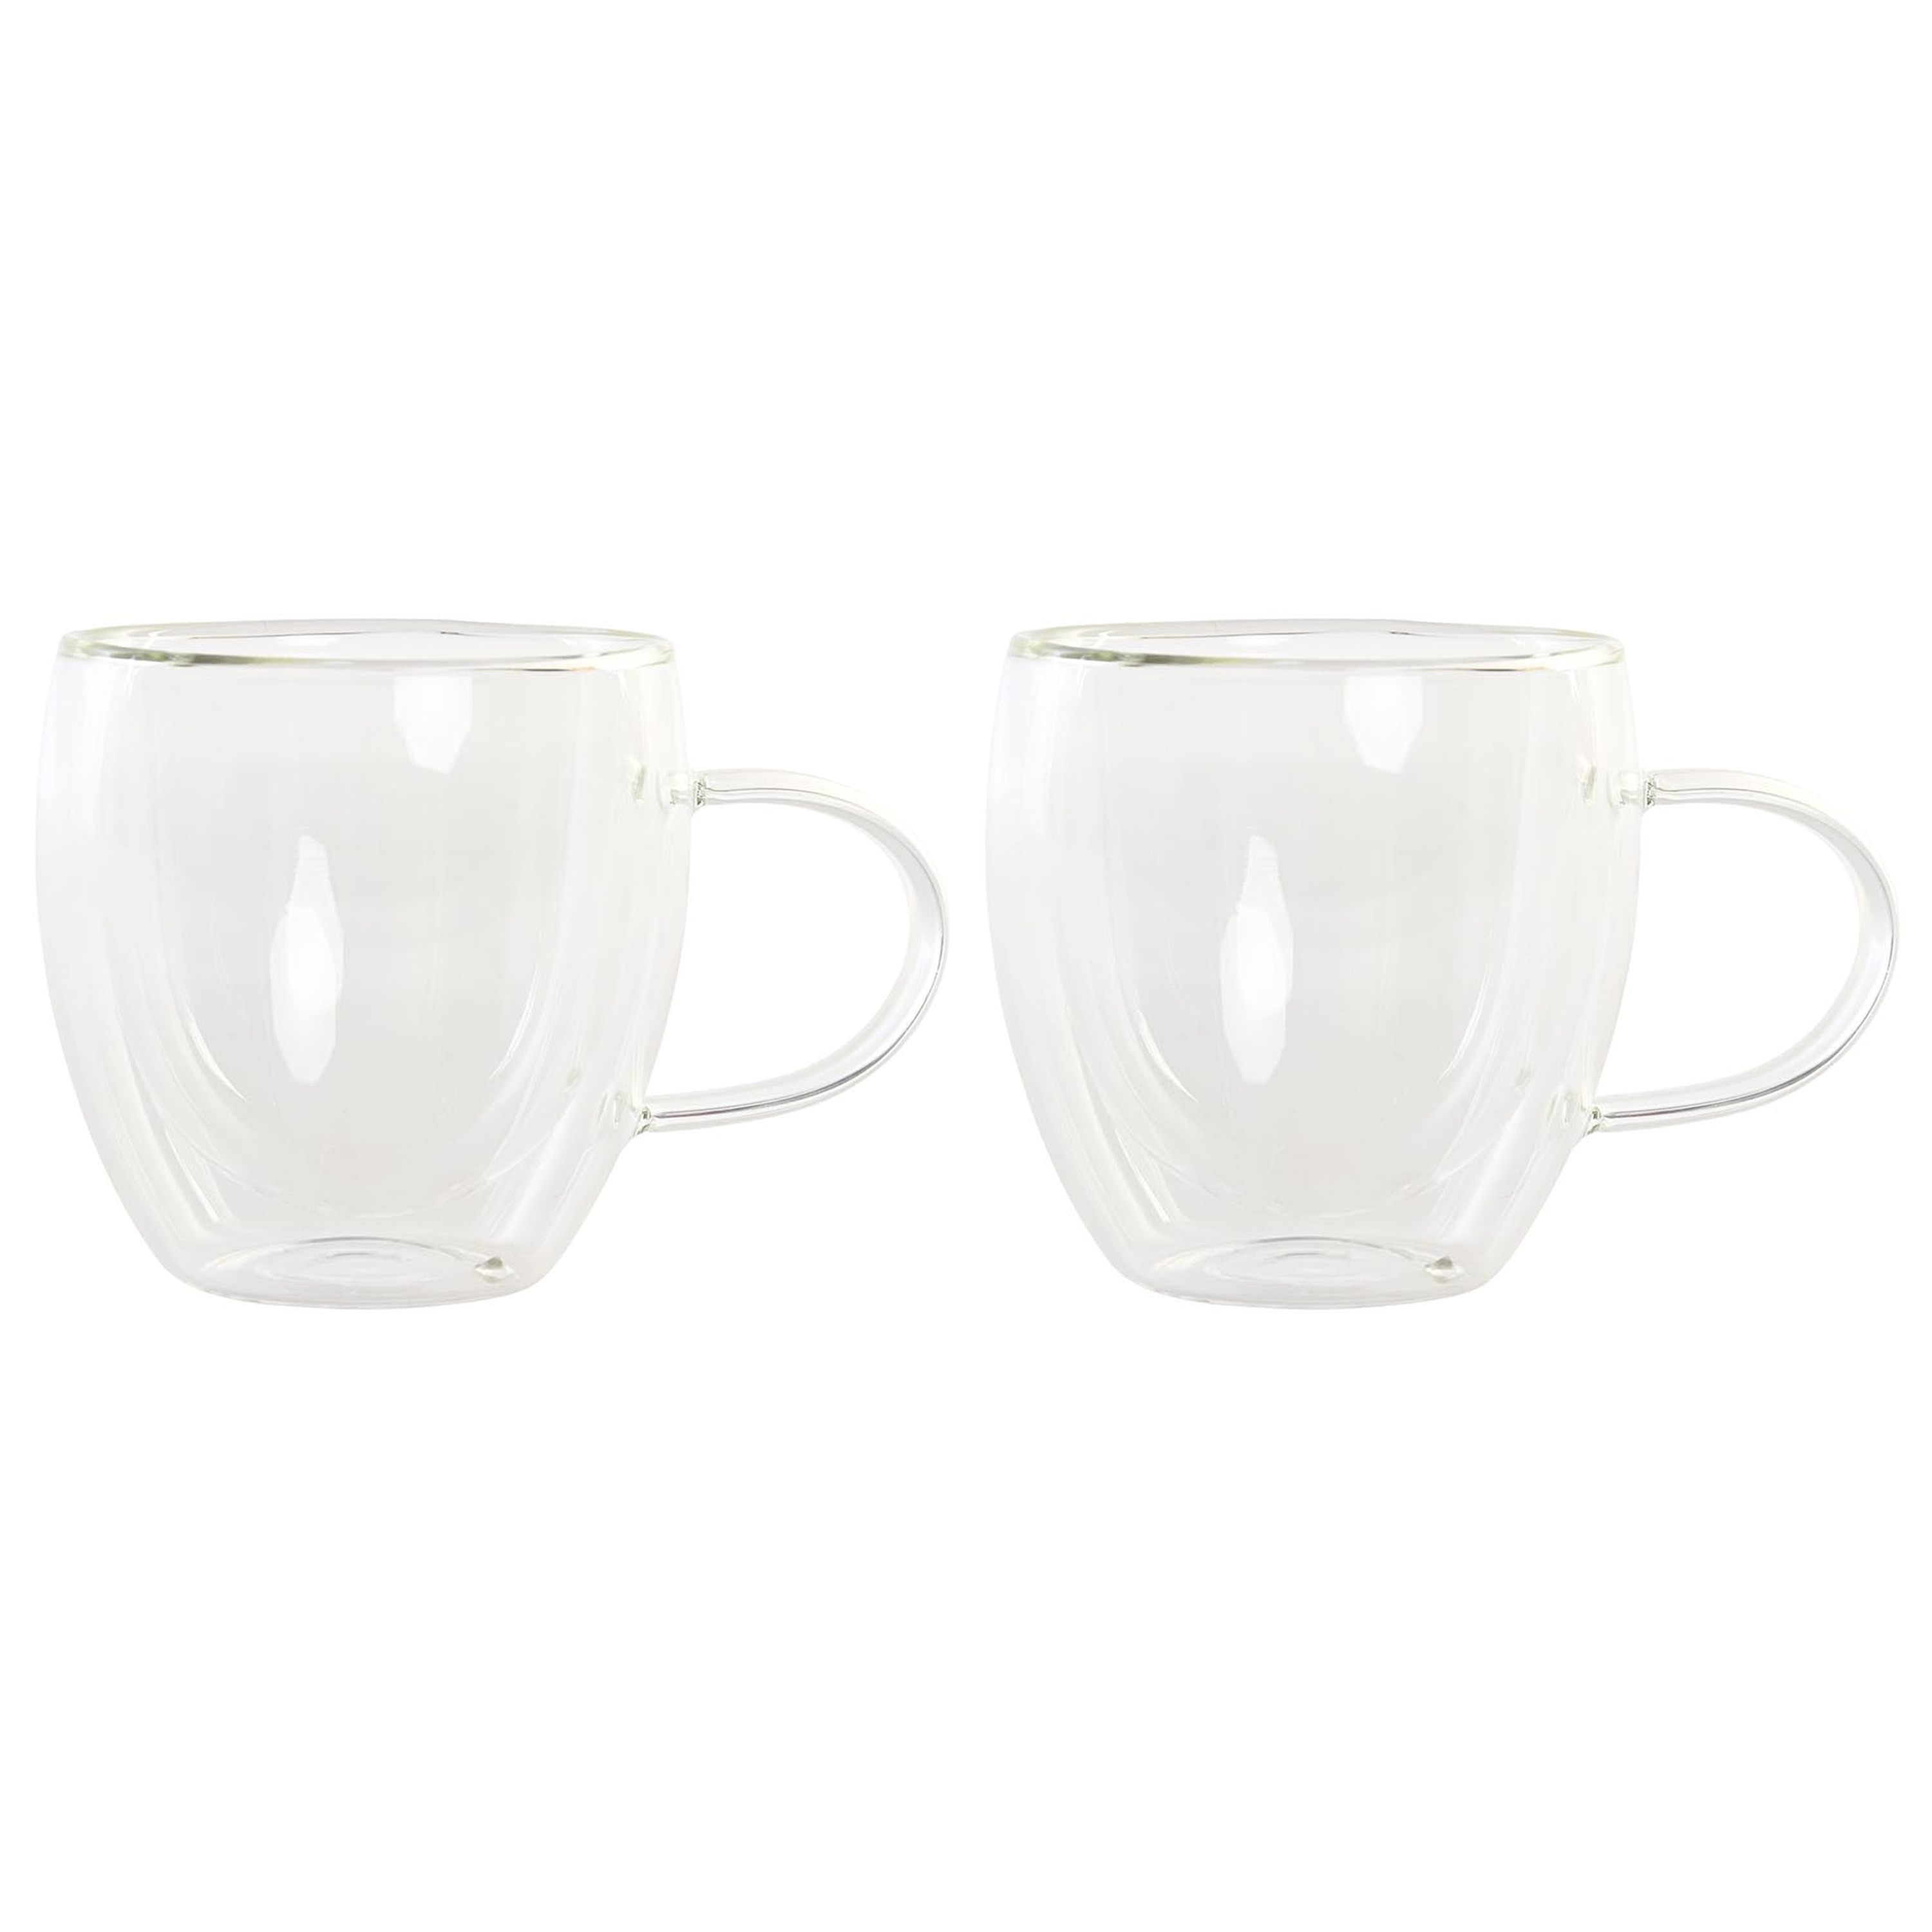 Items koffieglazen/theeglazen dubbelwandig - set 2x - cappuccino glazen - 250 ml -